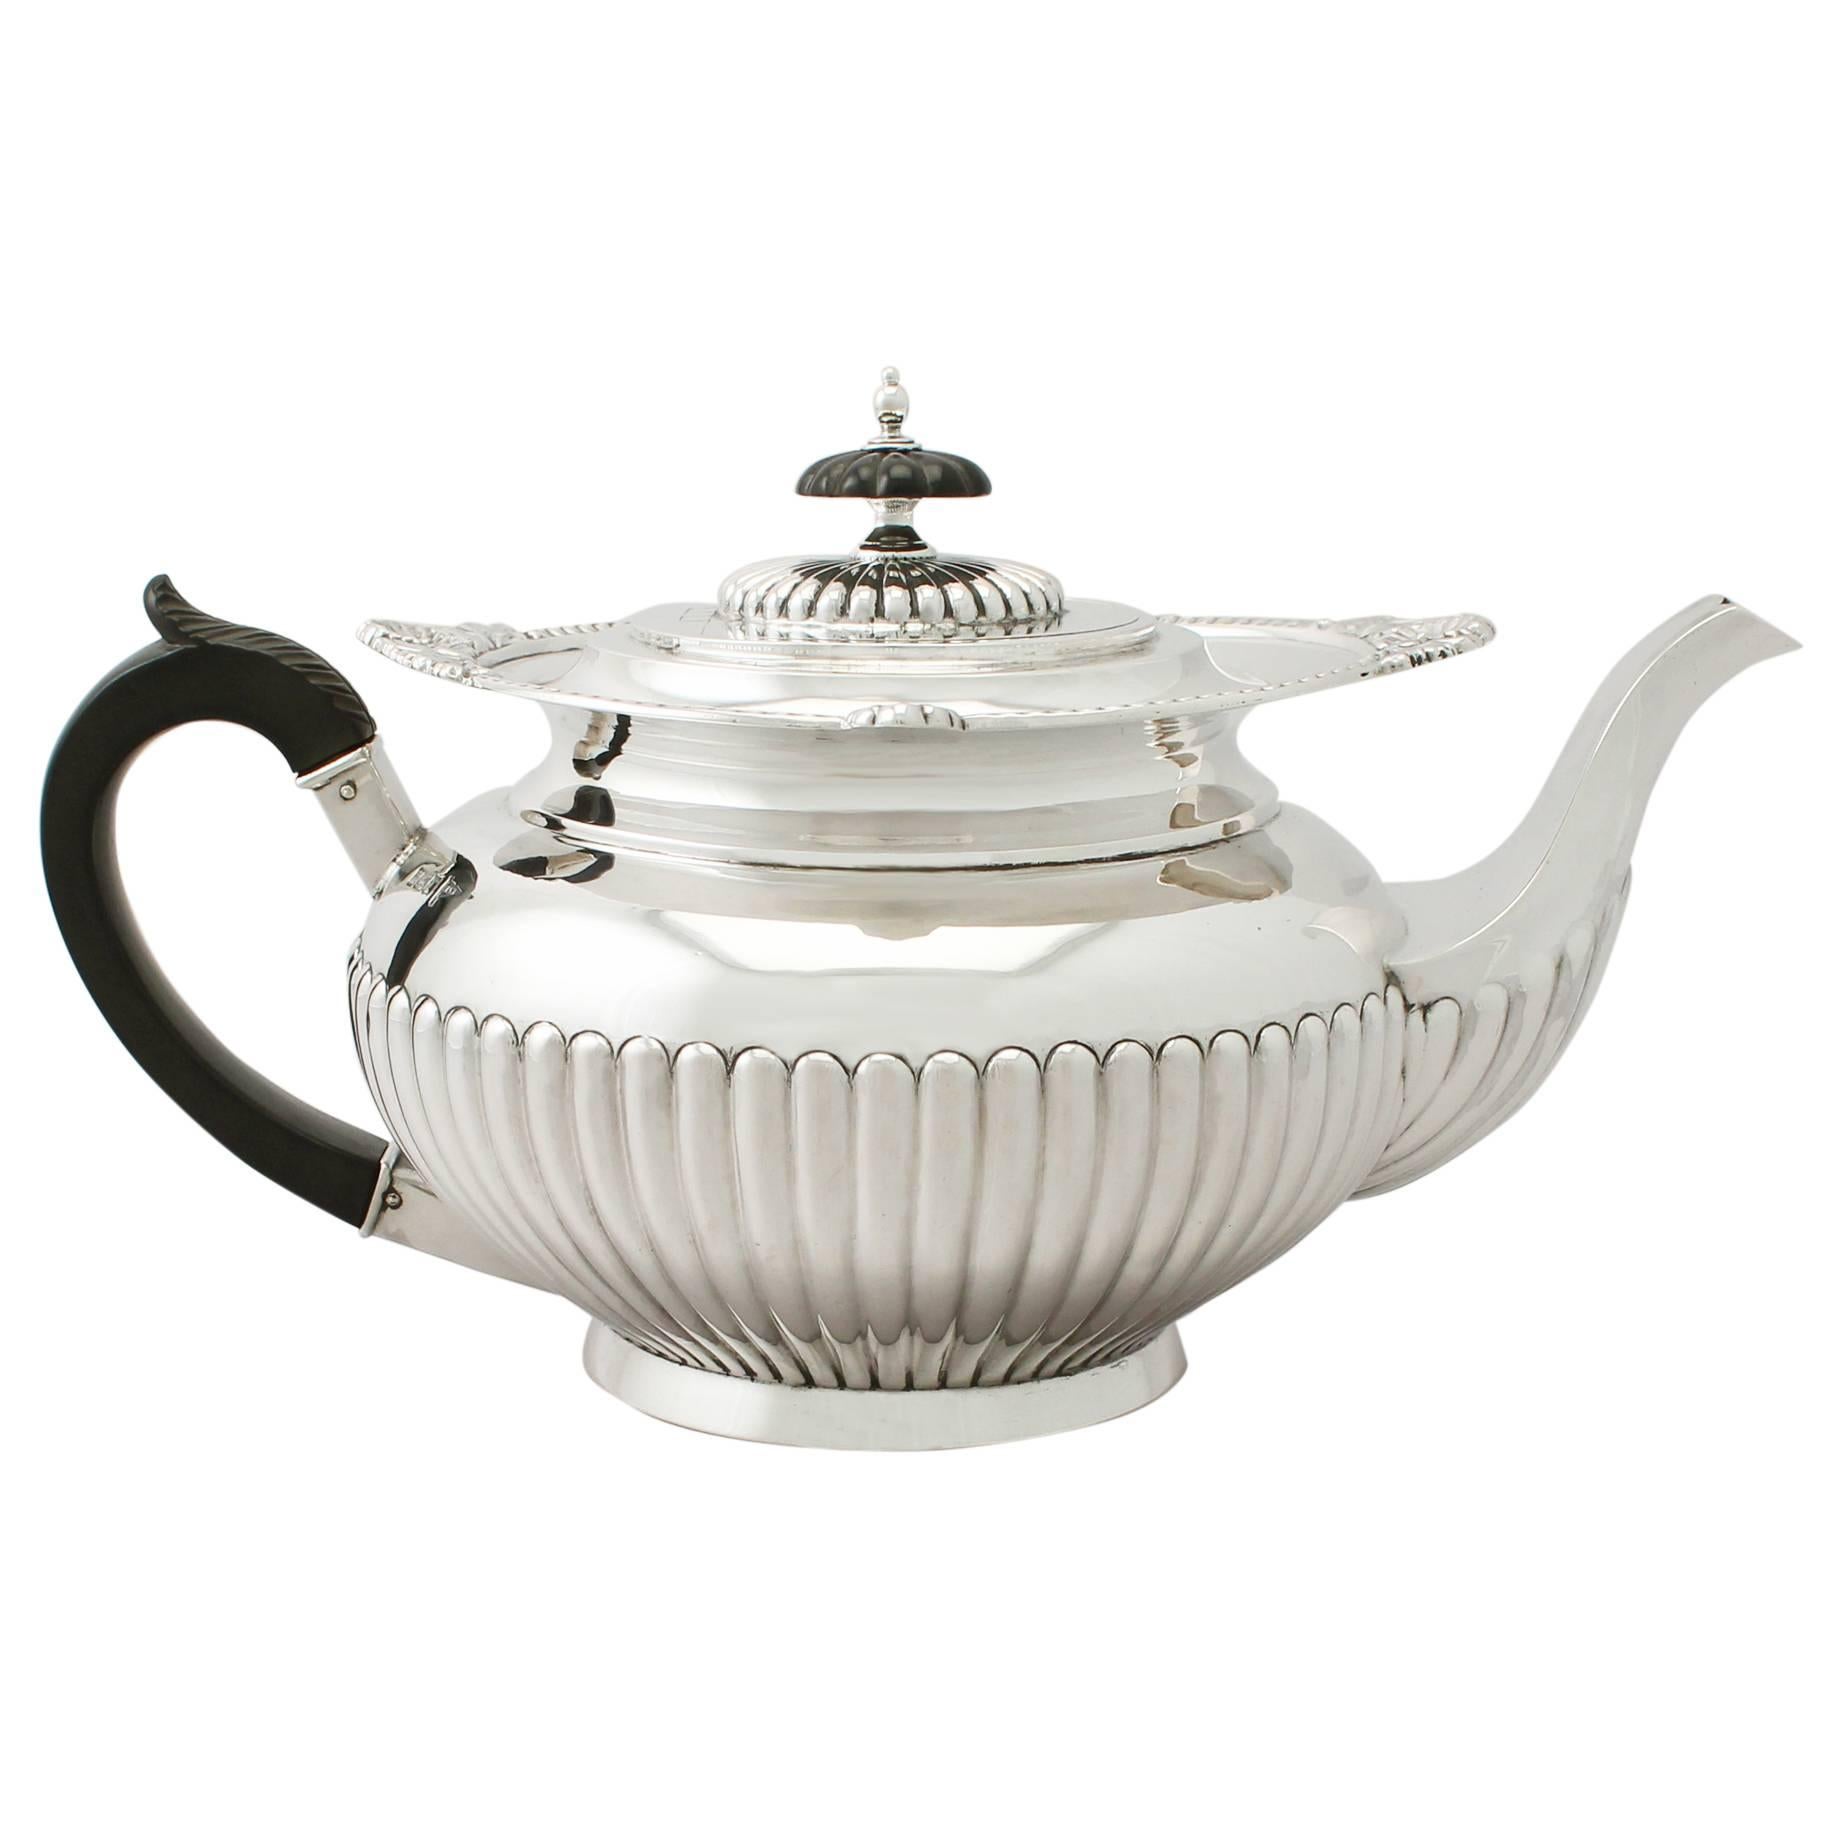 Sterling Silver Teapot, Antique Edwardian